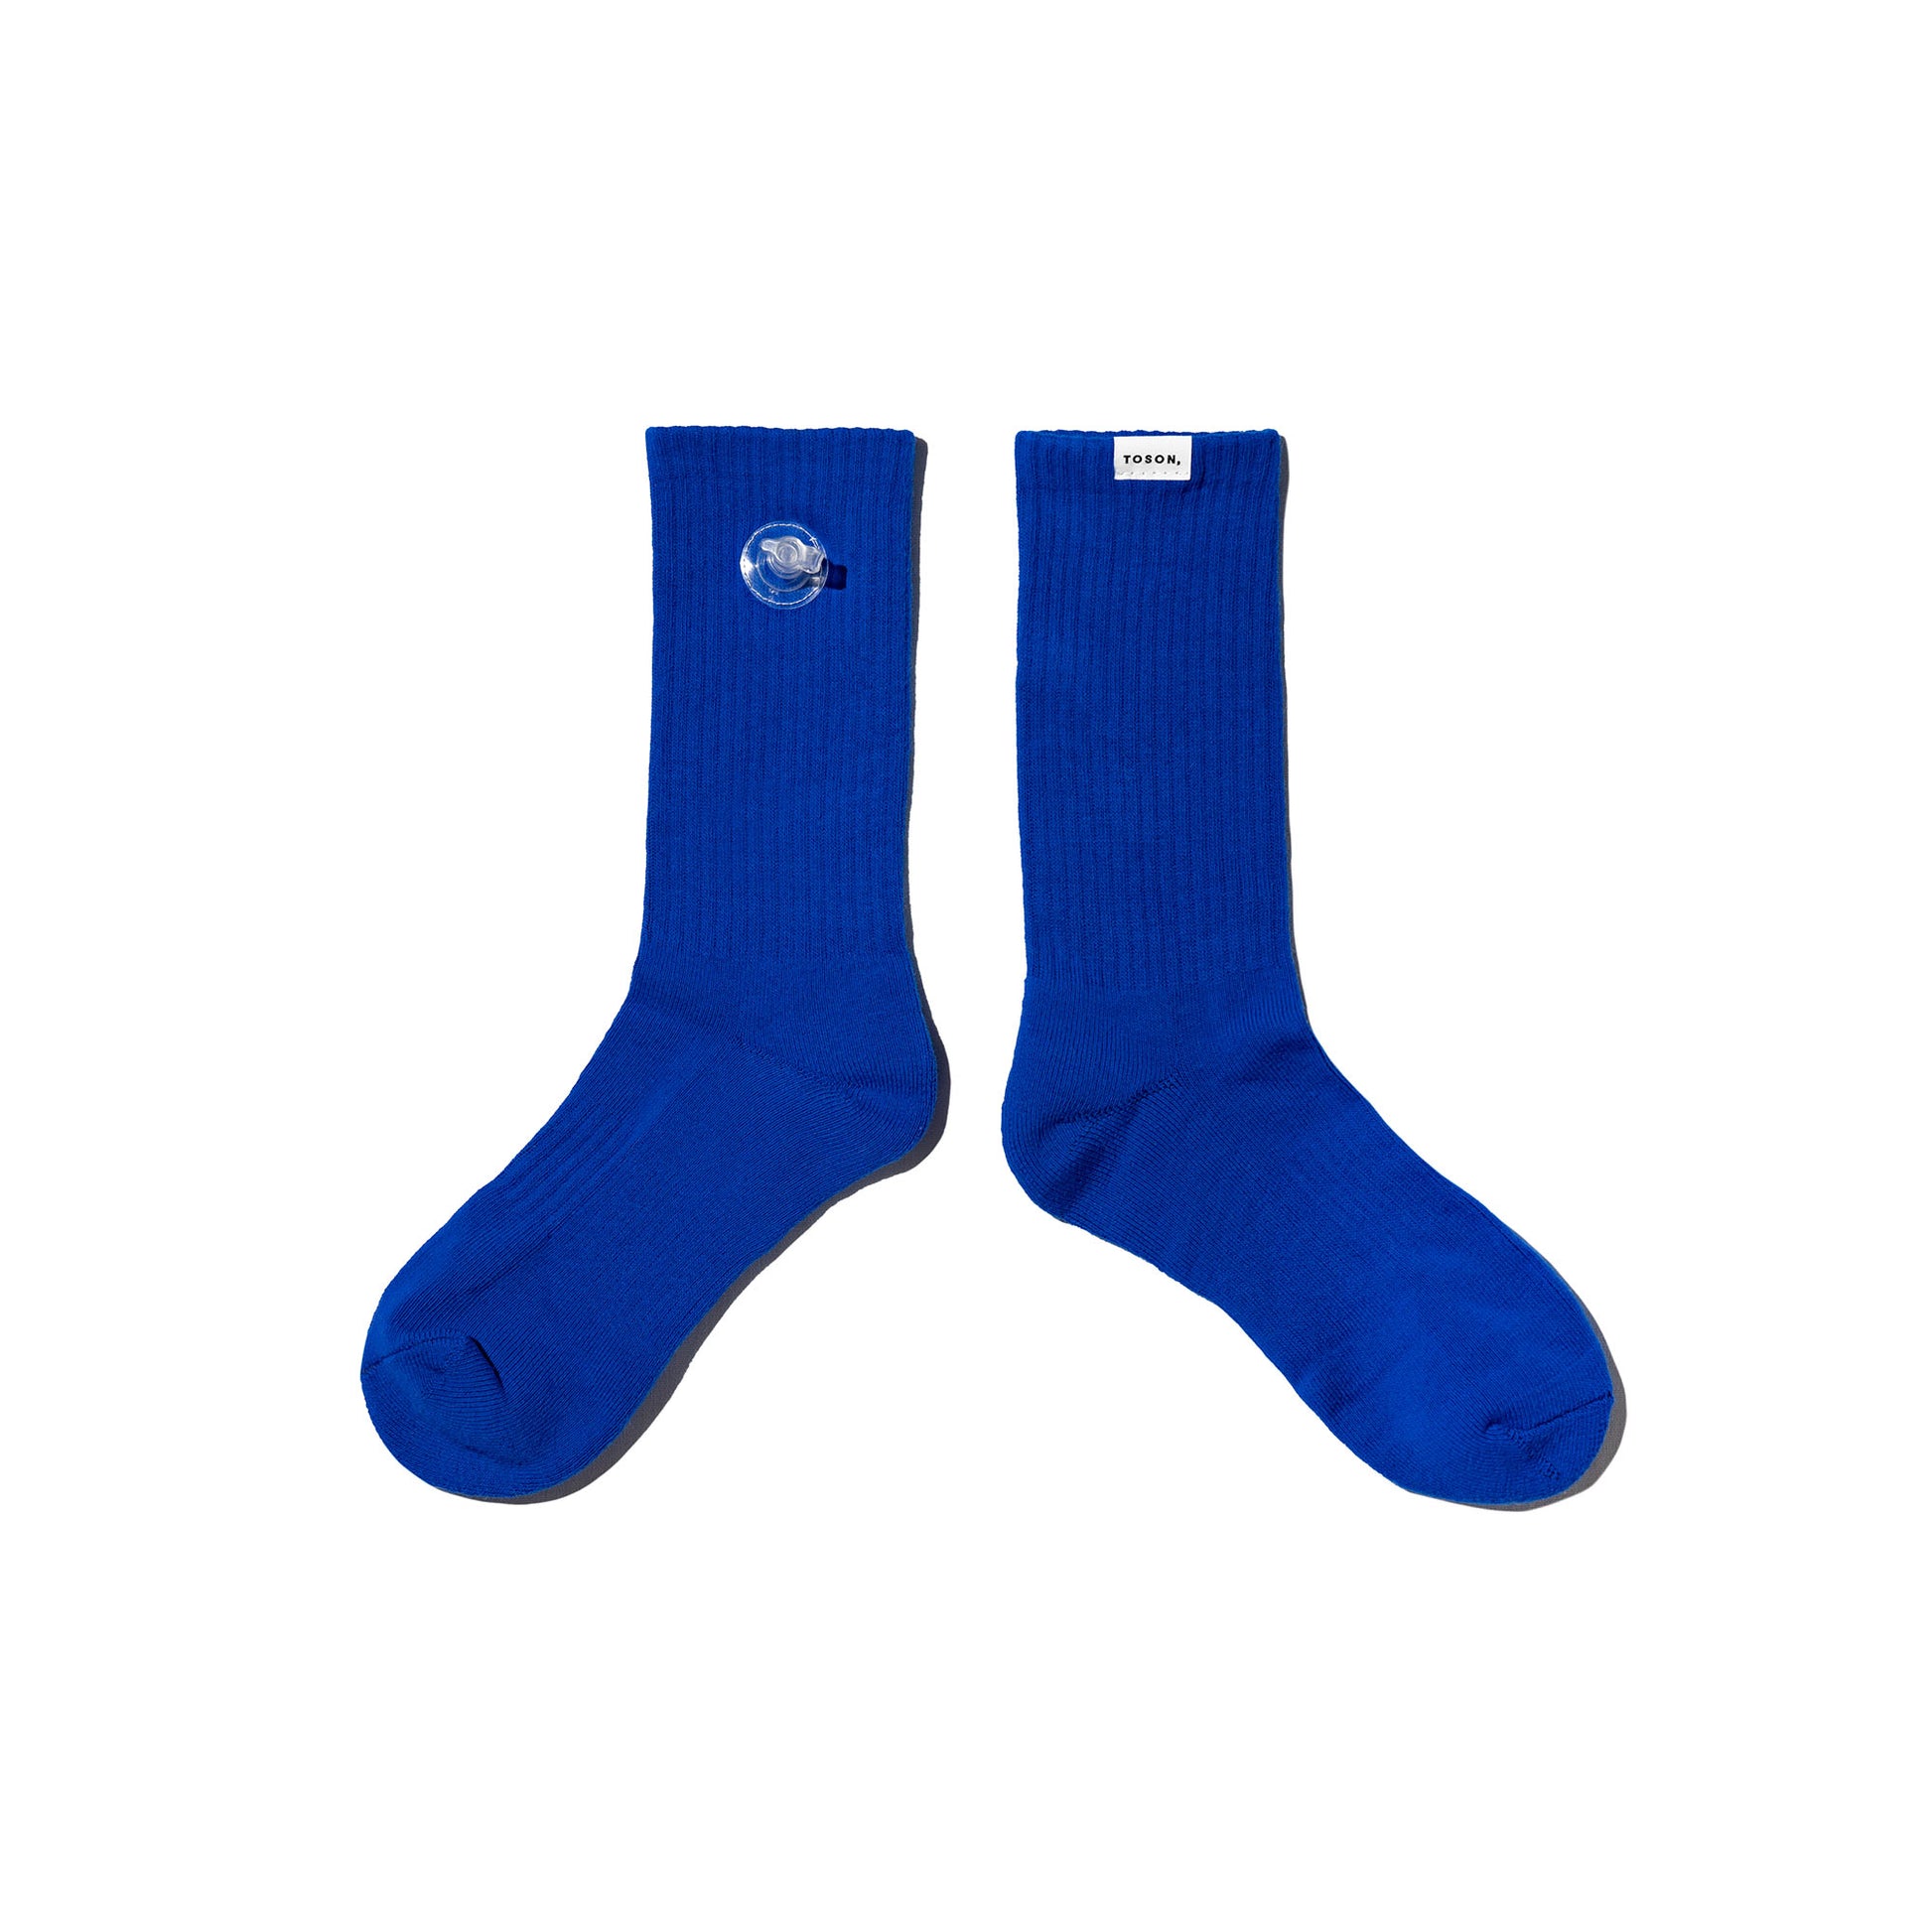 Toson, Inflatable Socks 2 Pack in Orange + Royal Blue